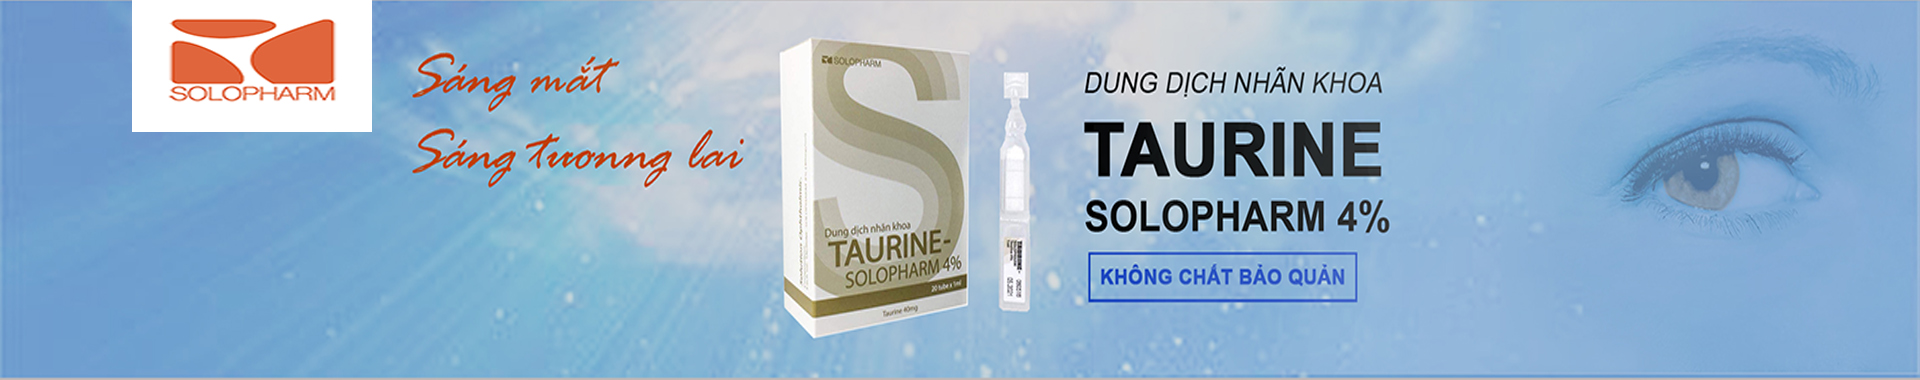 Dung dịch nhãn khoa Taurine Solopharm 4% 0,4ML